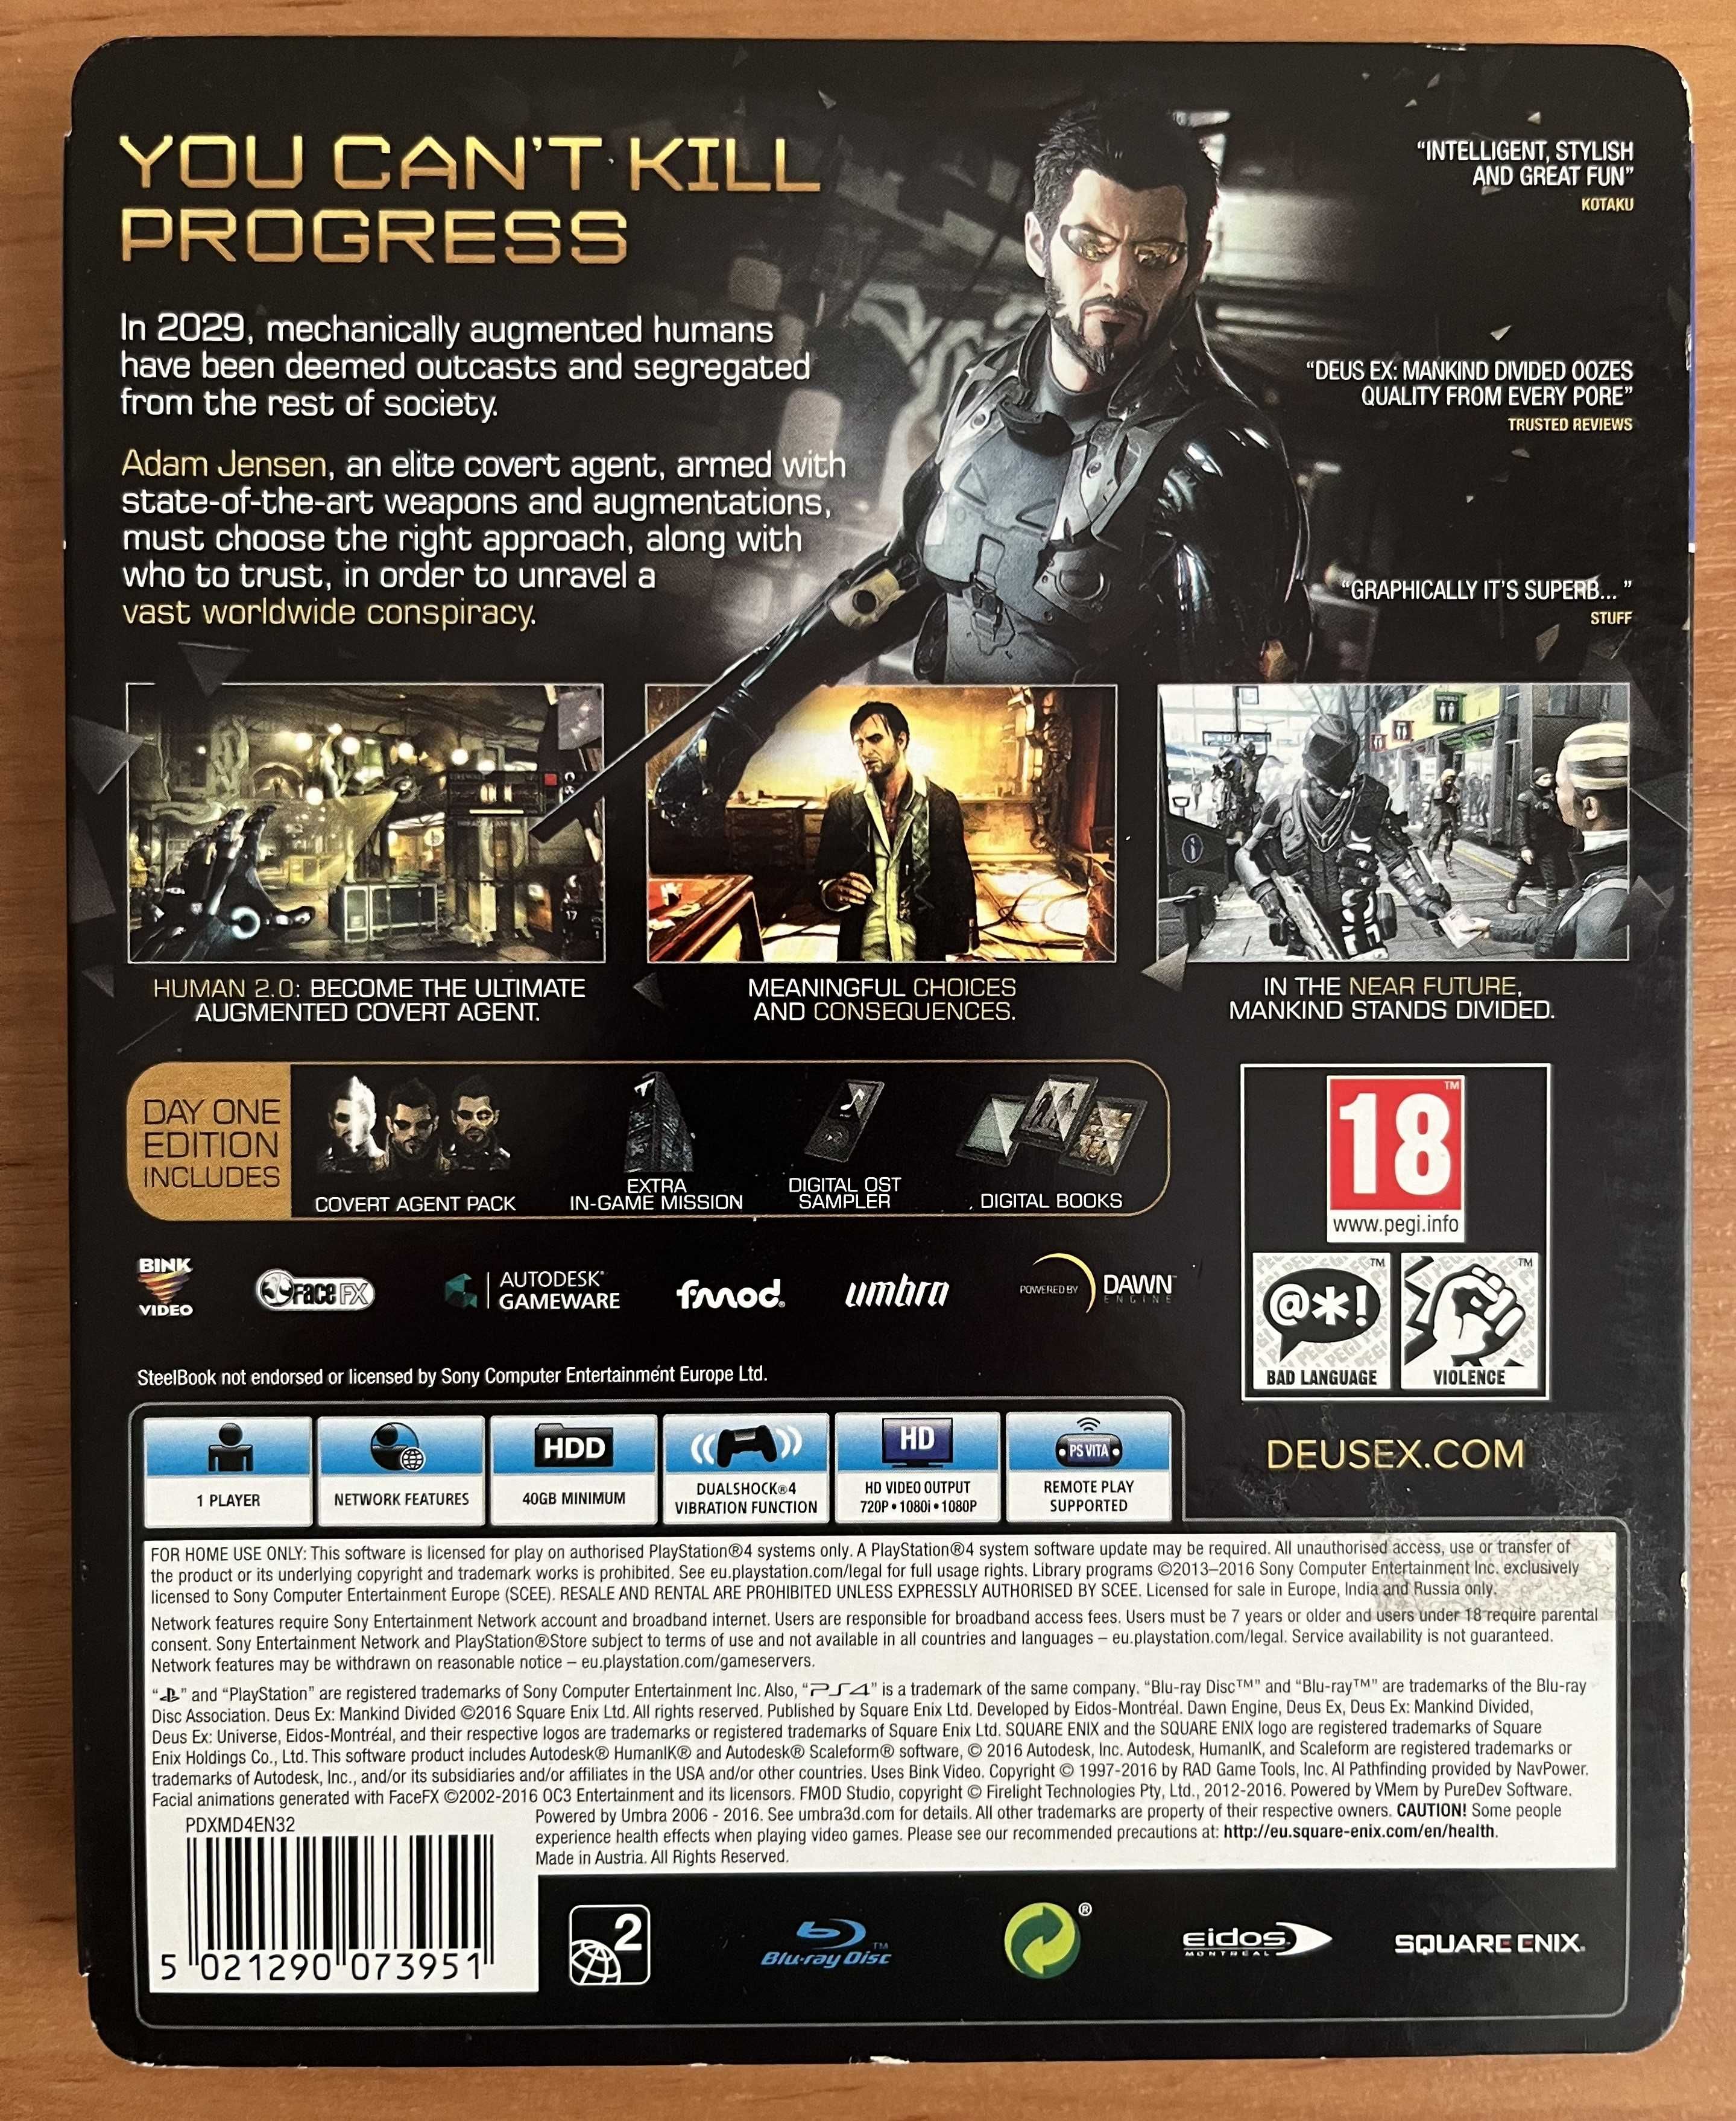 PS4 Steel book metal Deus Ex Mankind Divided Rozłam Ludzkości Day One